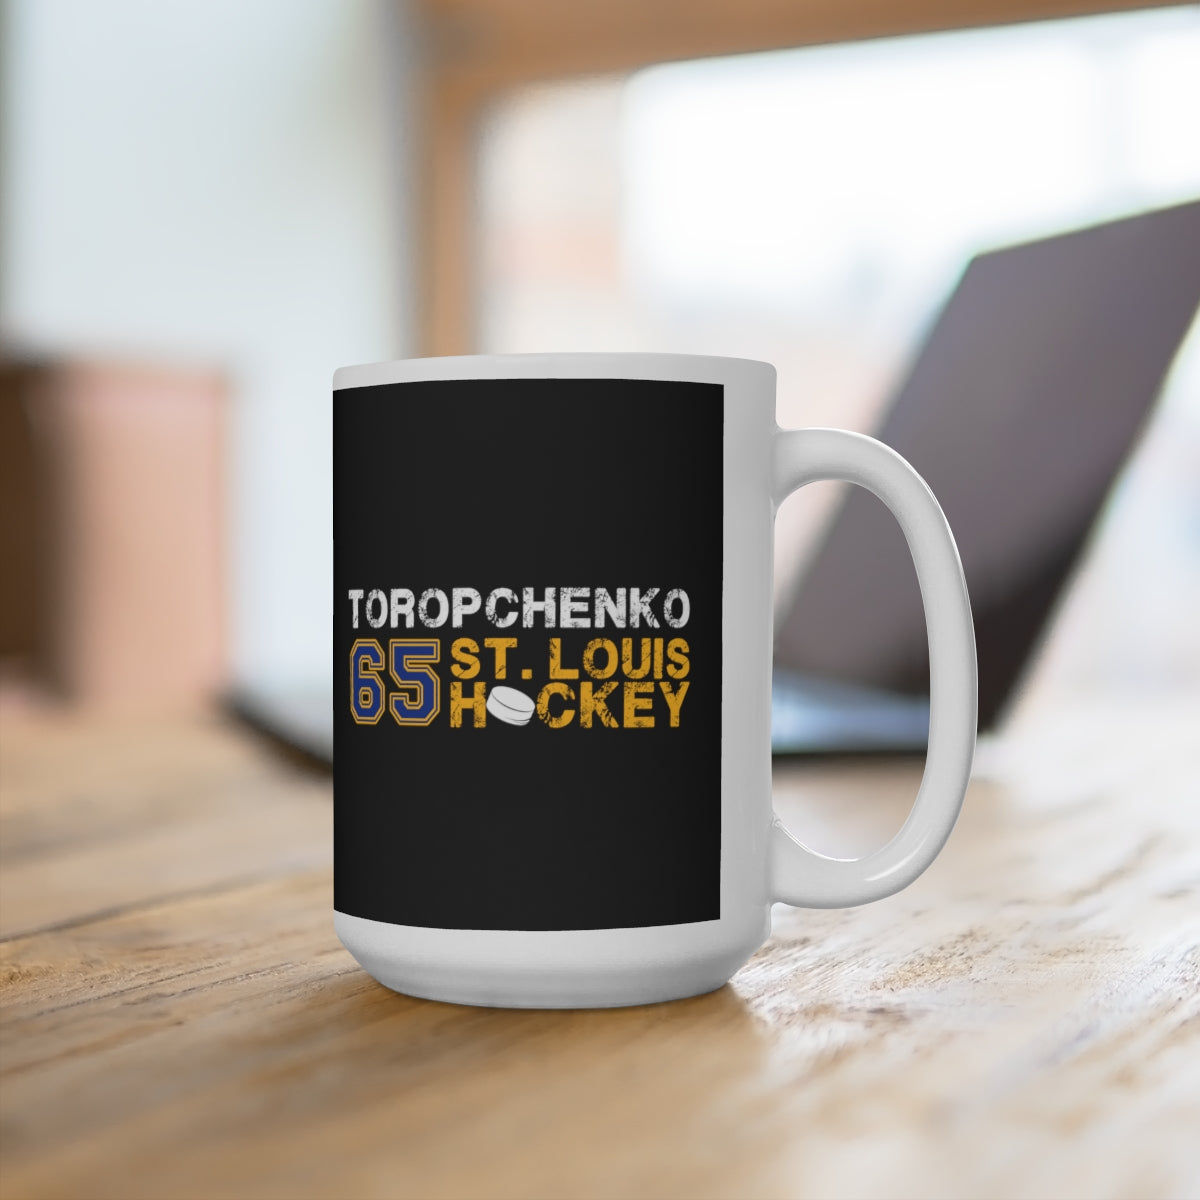 Toropchenko 65 St. Louis Hockey Ceramic Coffee Mug In Black, 15oz